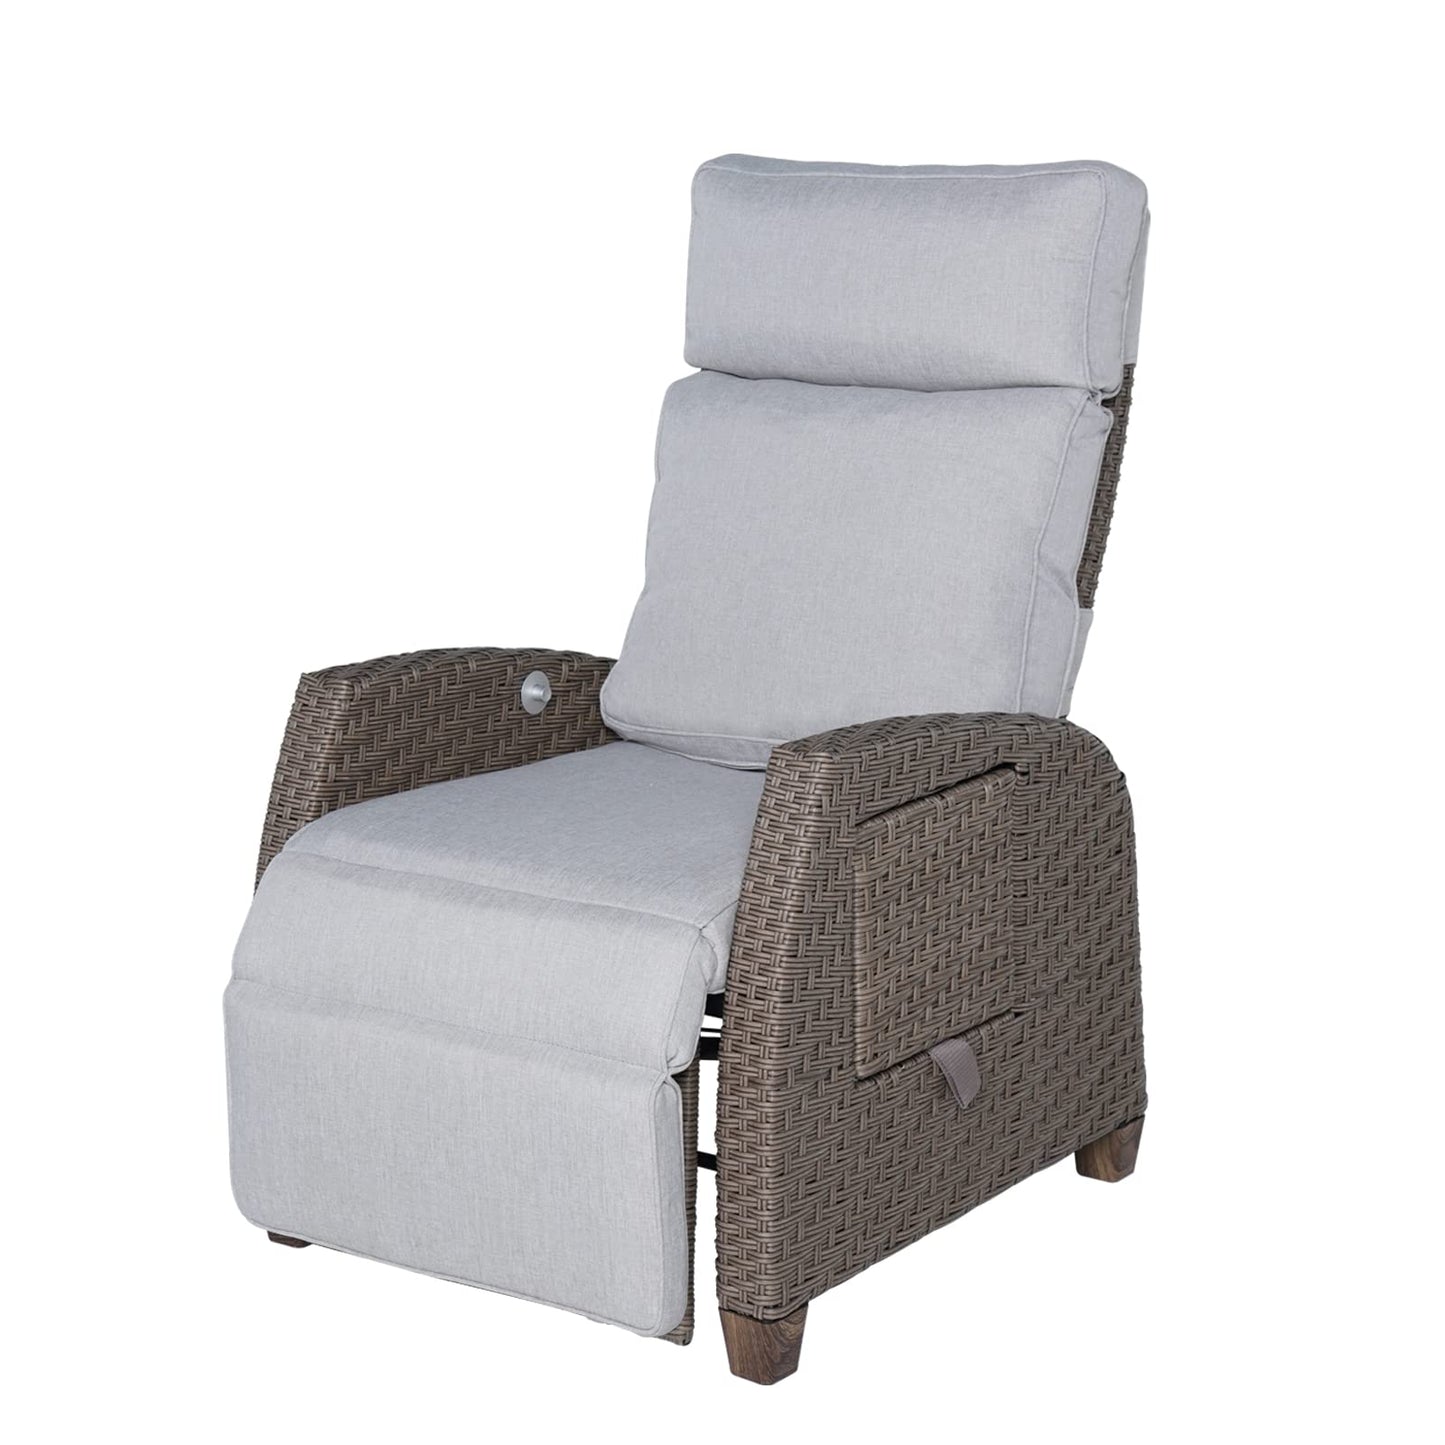 Grand patio Indoor & Outdoor Recliner Chair PE Wicker Patio Recliner with Flip Table Reclining Lounge Chair, Mist Grey